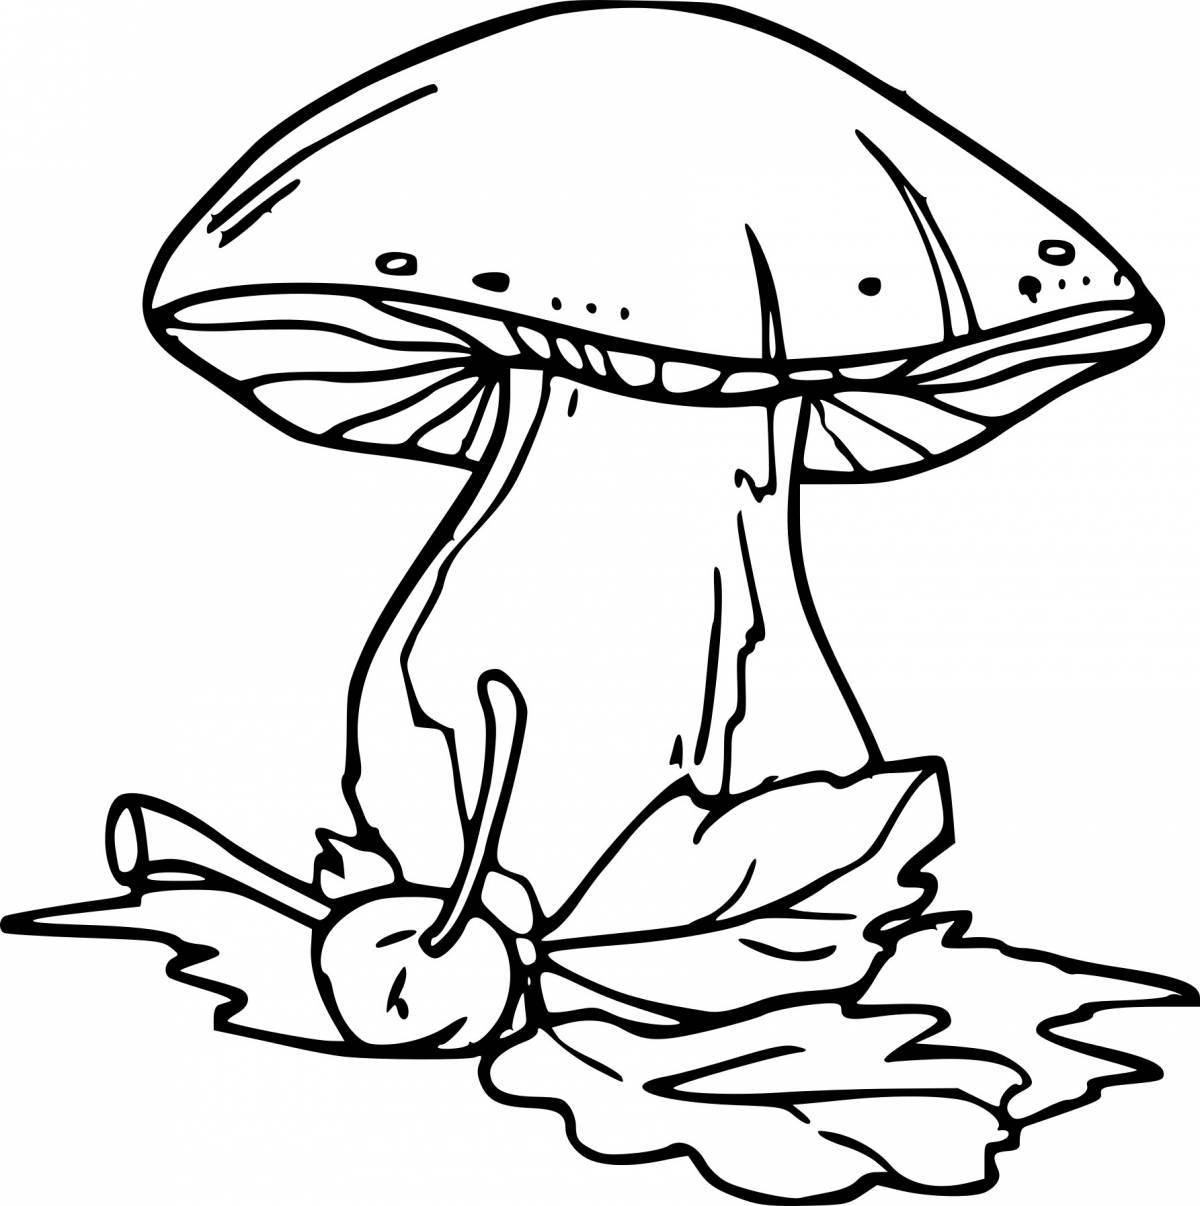 Glorious porcini mushroom coloring for children